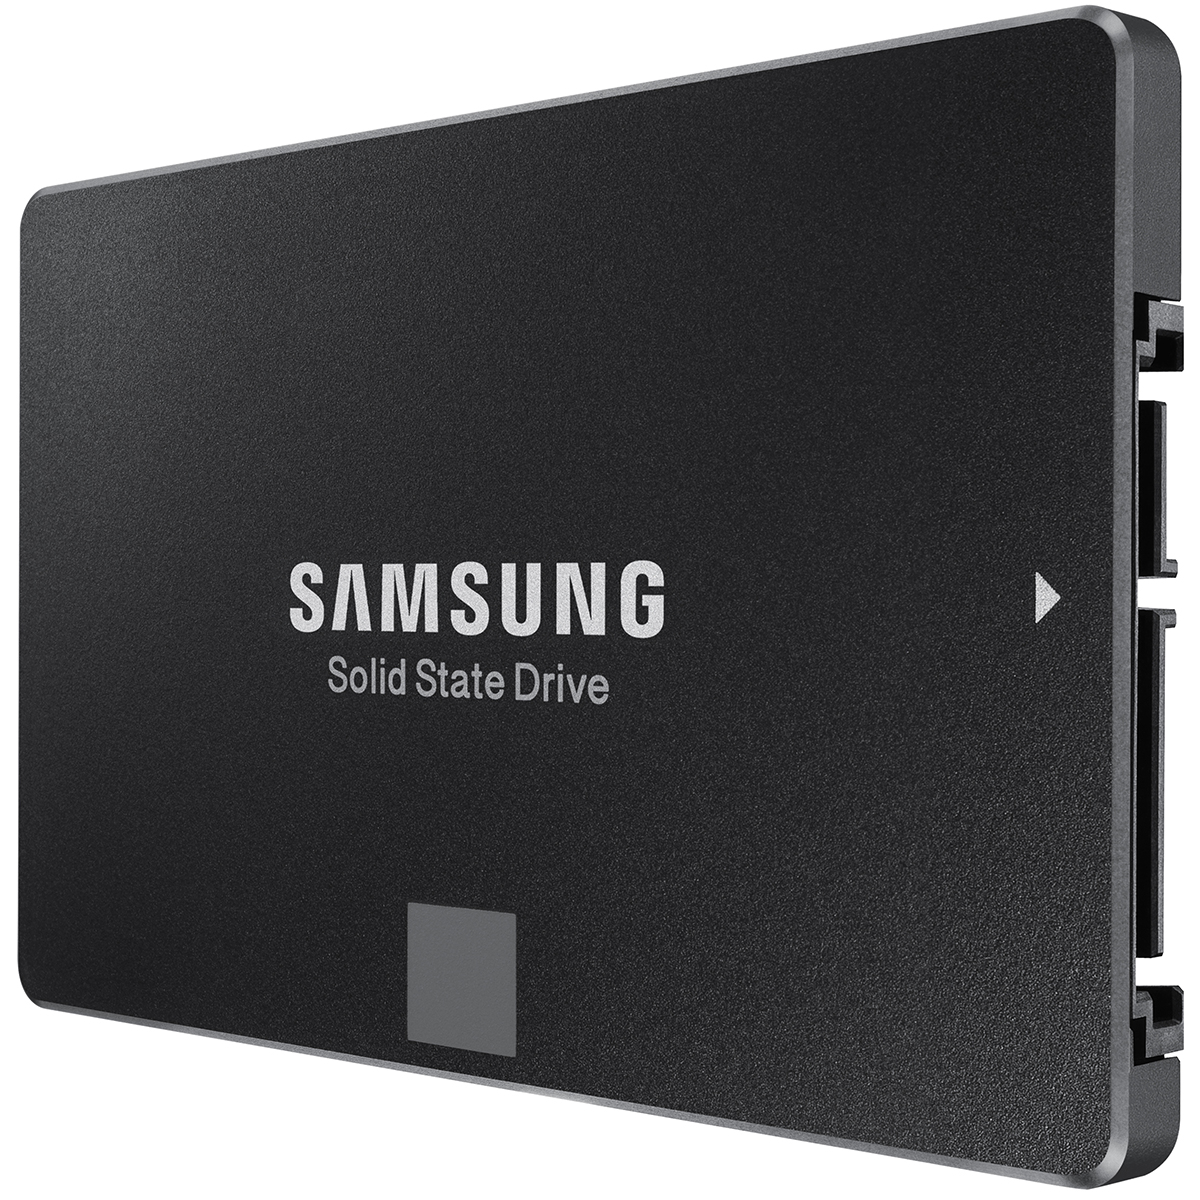  - Samsung 4TB 860 EVO SSD 2.5" SATA 6Gbps 64 Layer 3D V-NAND Solid State Drive (MZ-76E4T0B/EU)